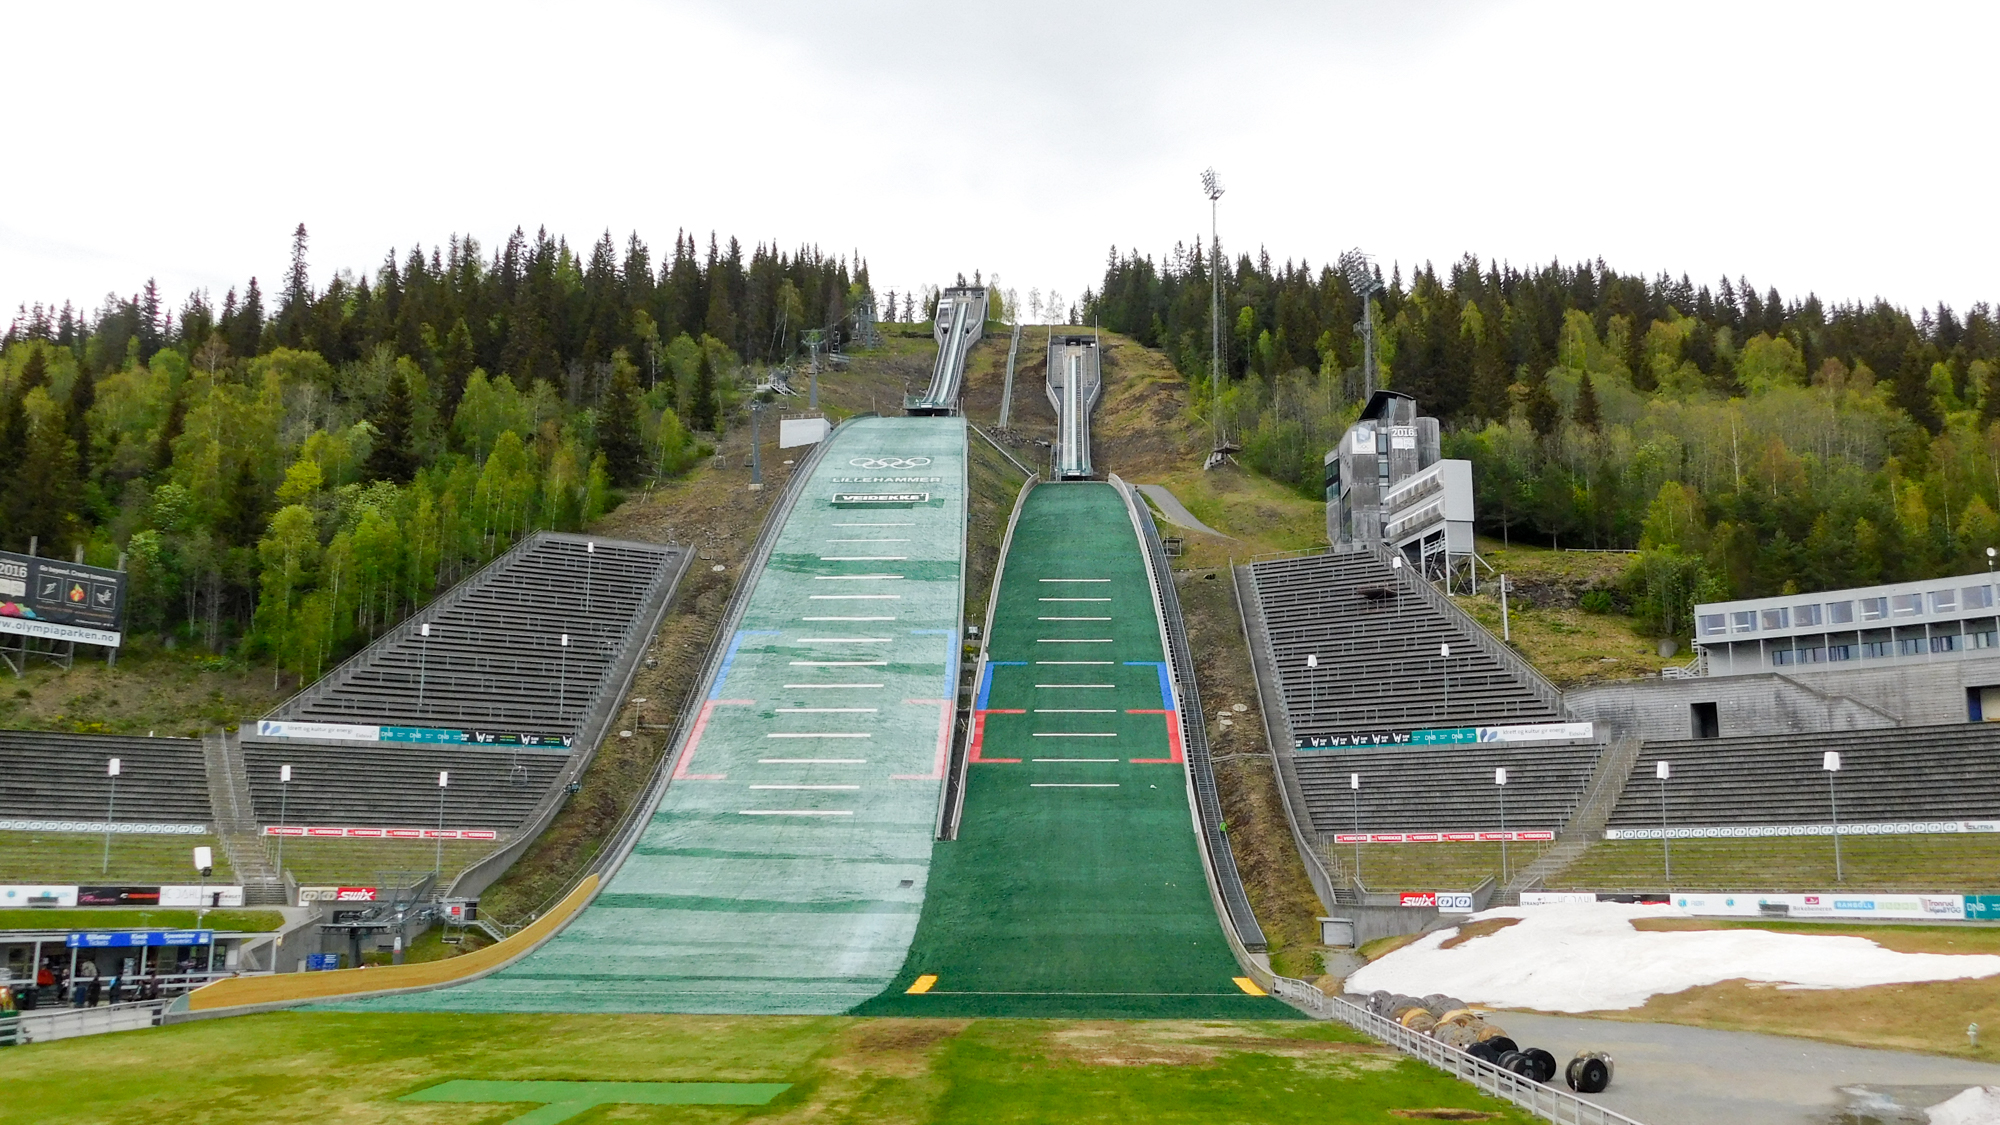 Olympíjsky štadión Lillehammer a skokanské mostíky.